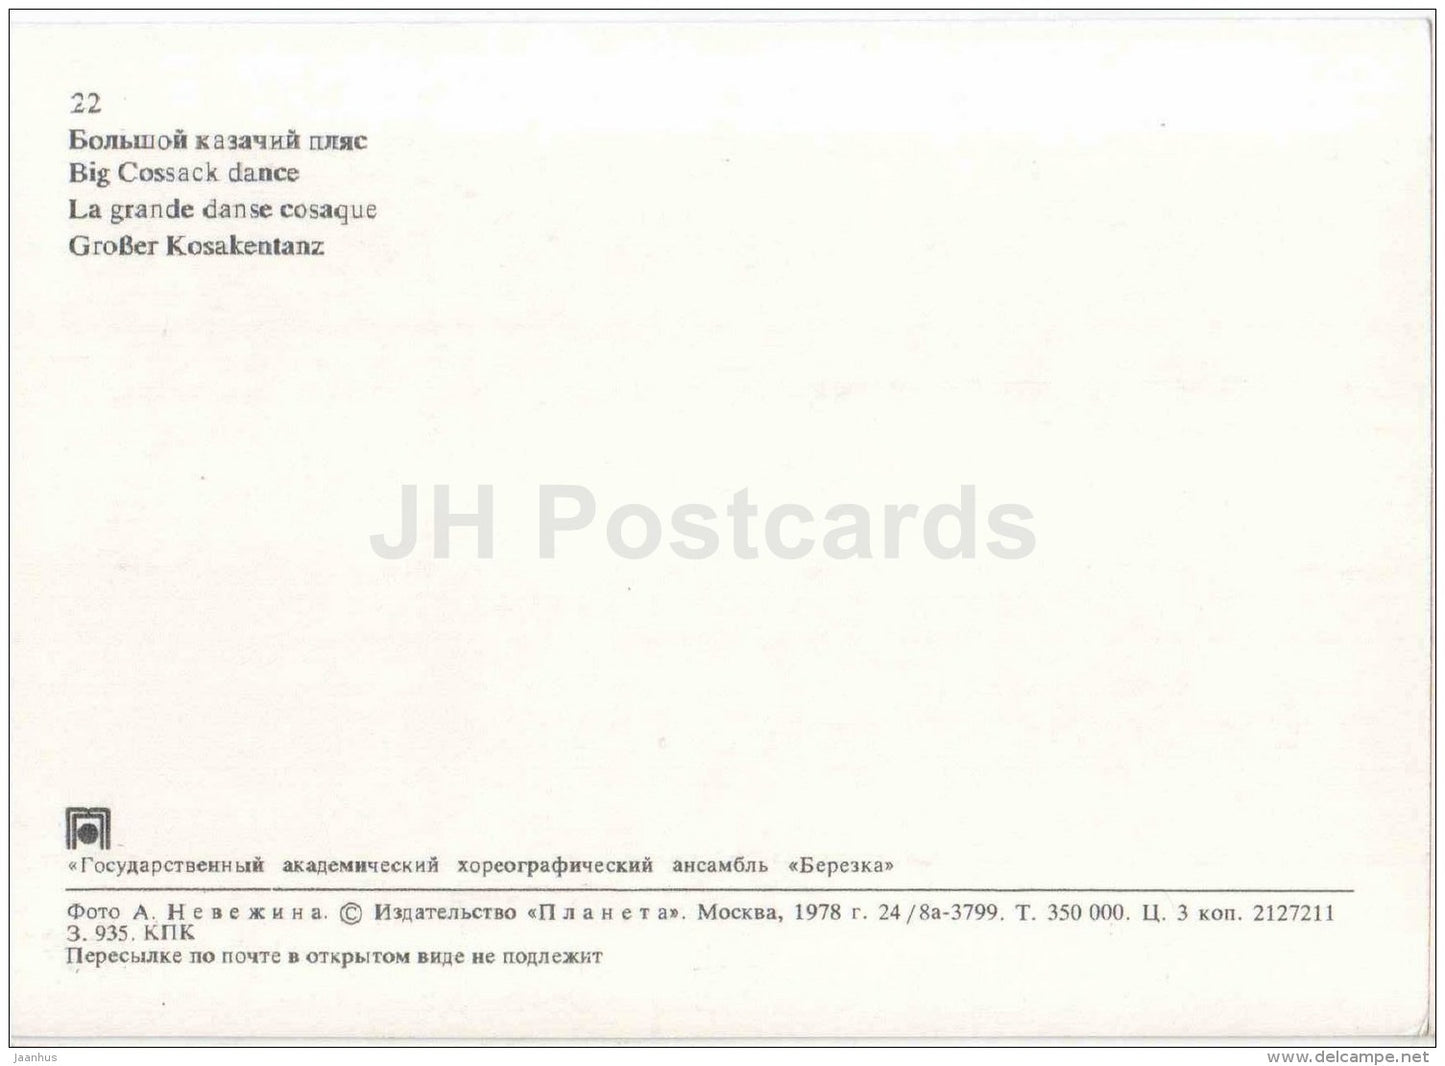 Big Cossack Dance - State Academic Choreographic Ensemble Berezka - Russia USSR - 1978 - unused - JH Postcards